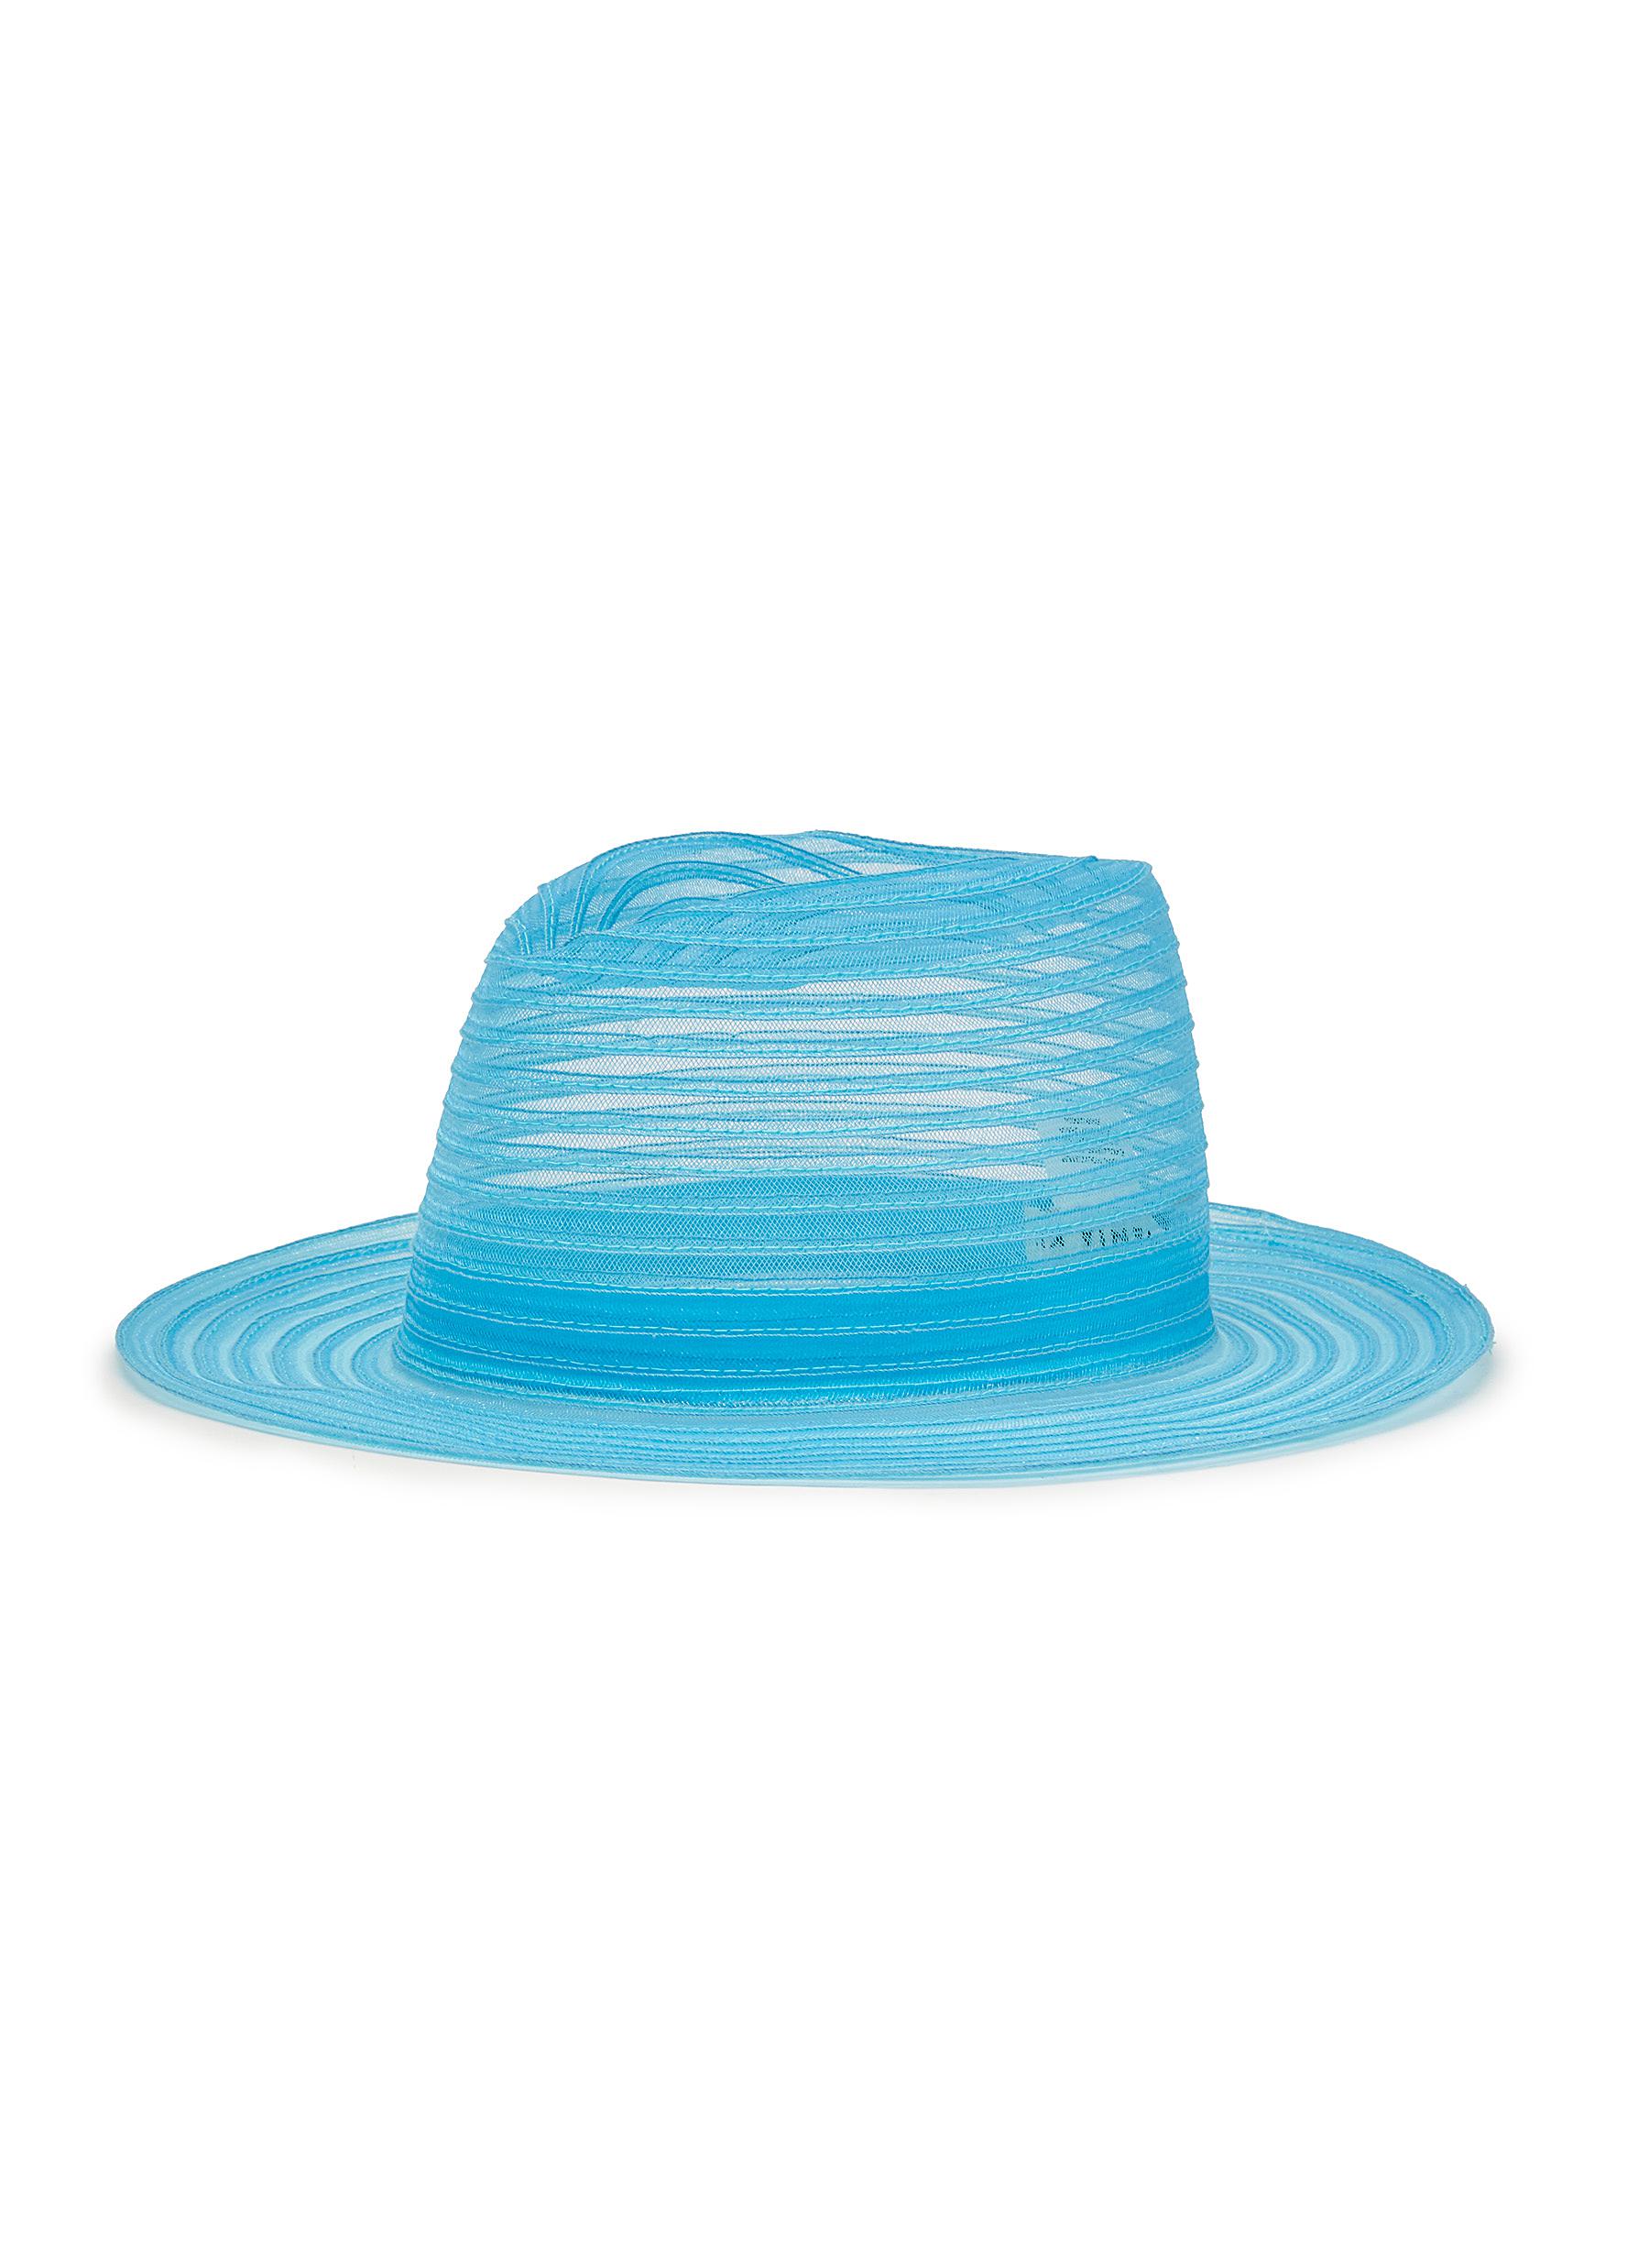 EUGENIA KIM ‘Blaine' Mesh Fedora Hat